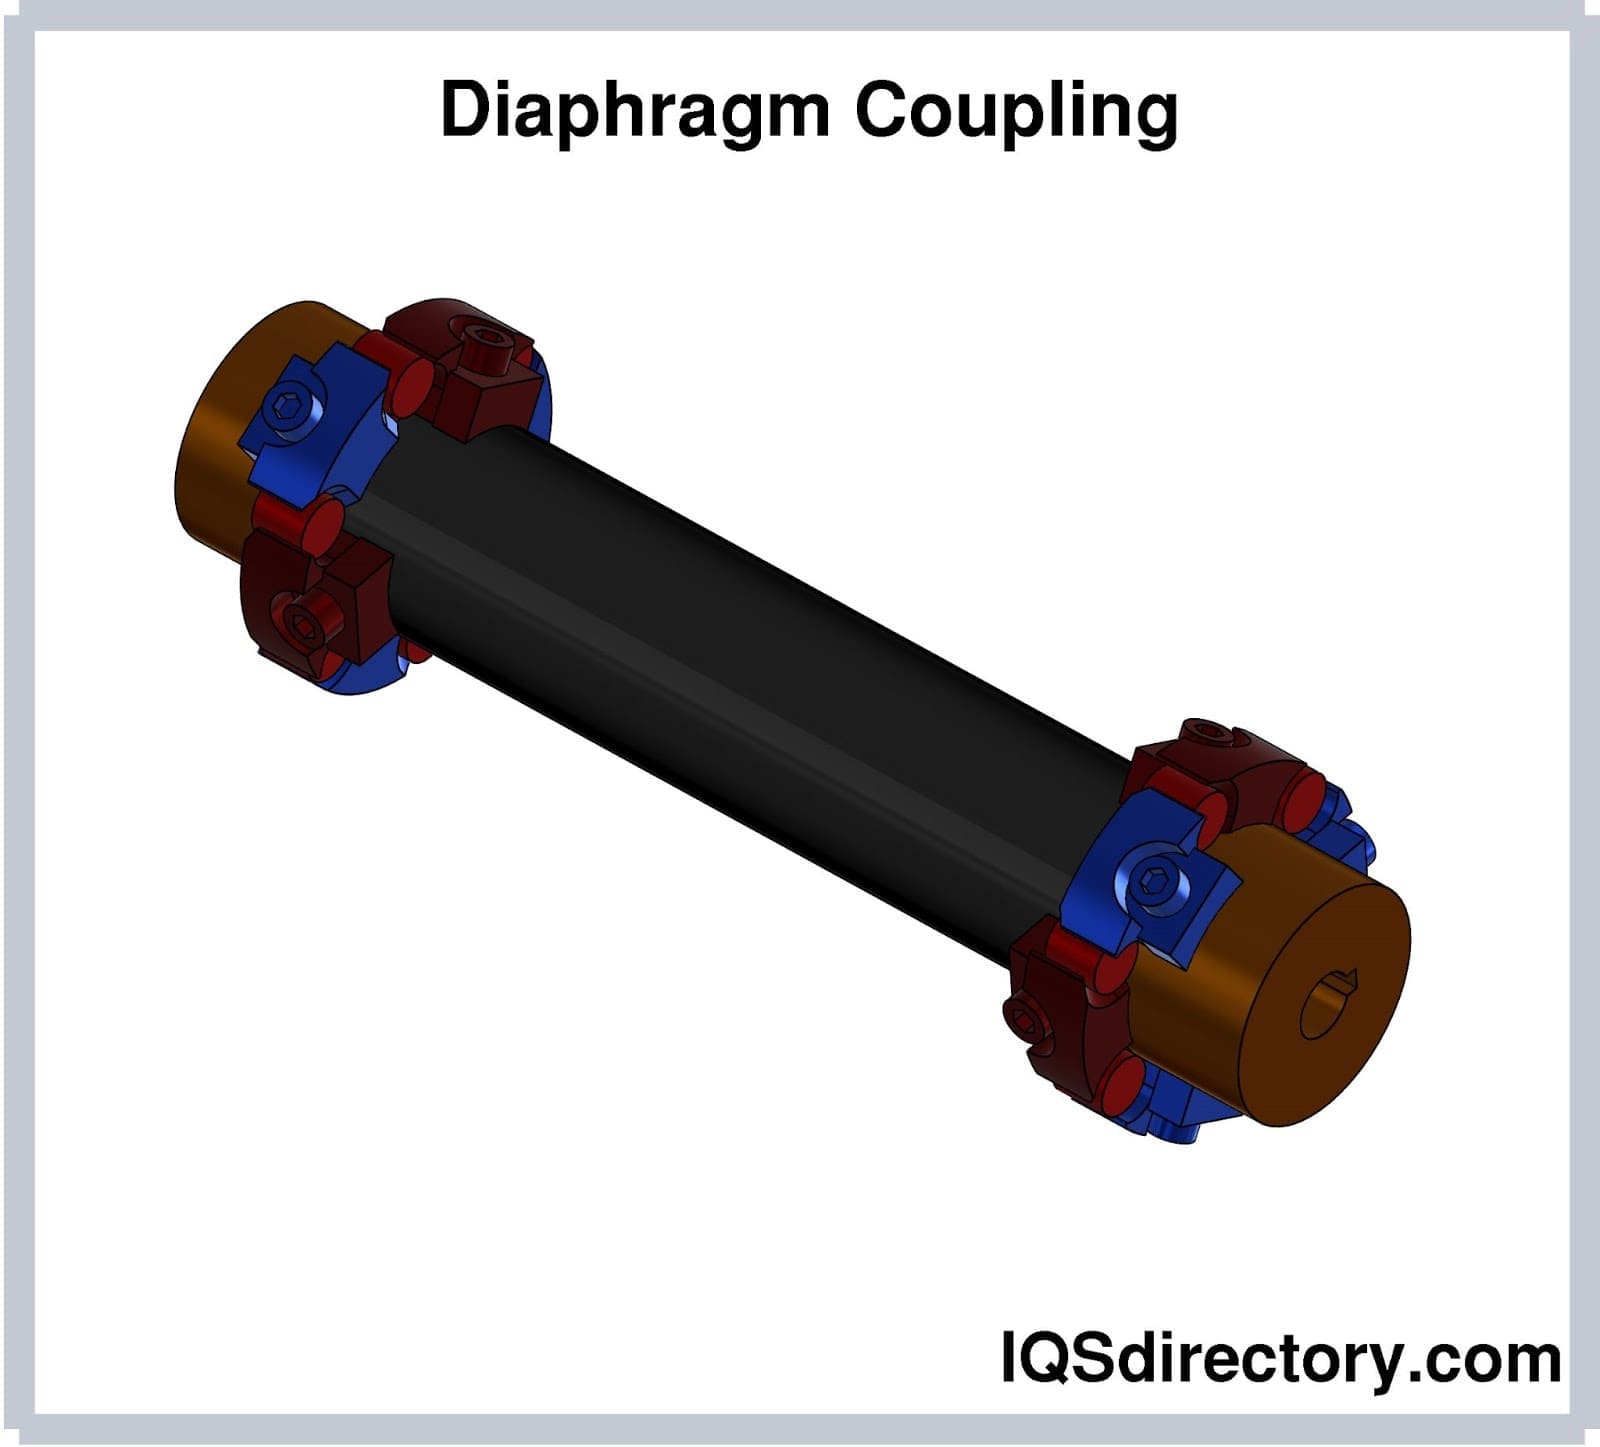 Diaphragm Coupling